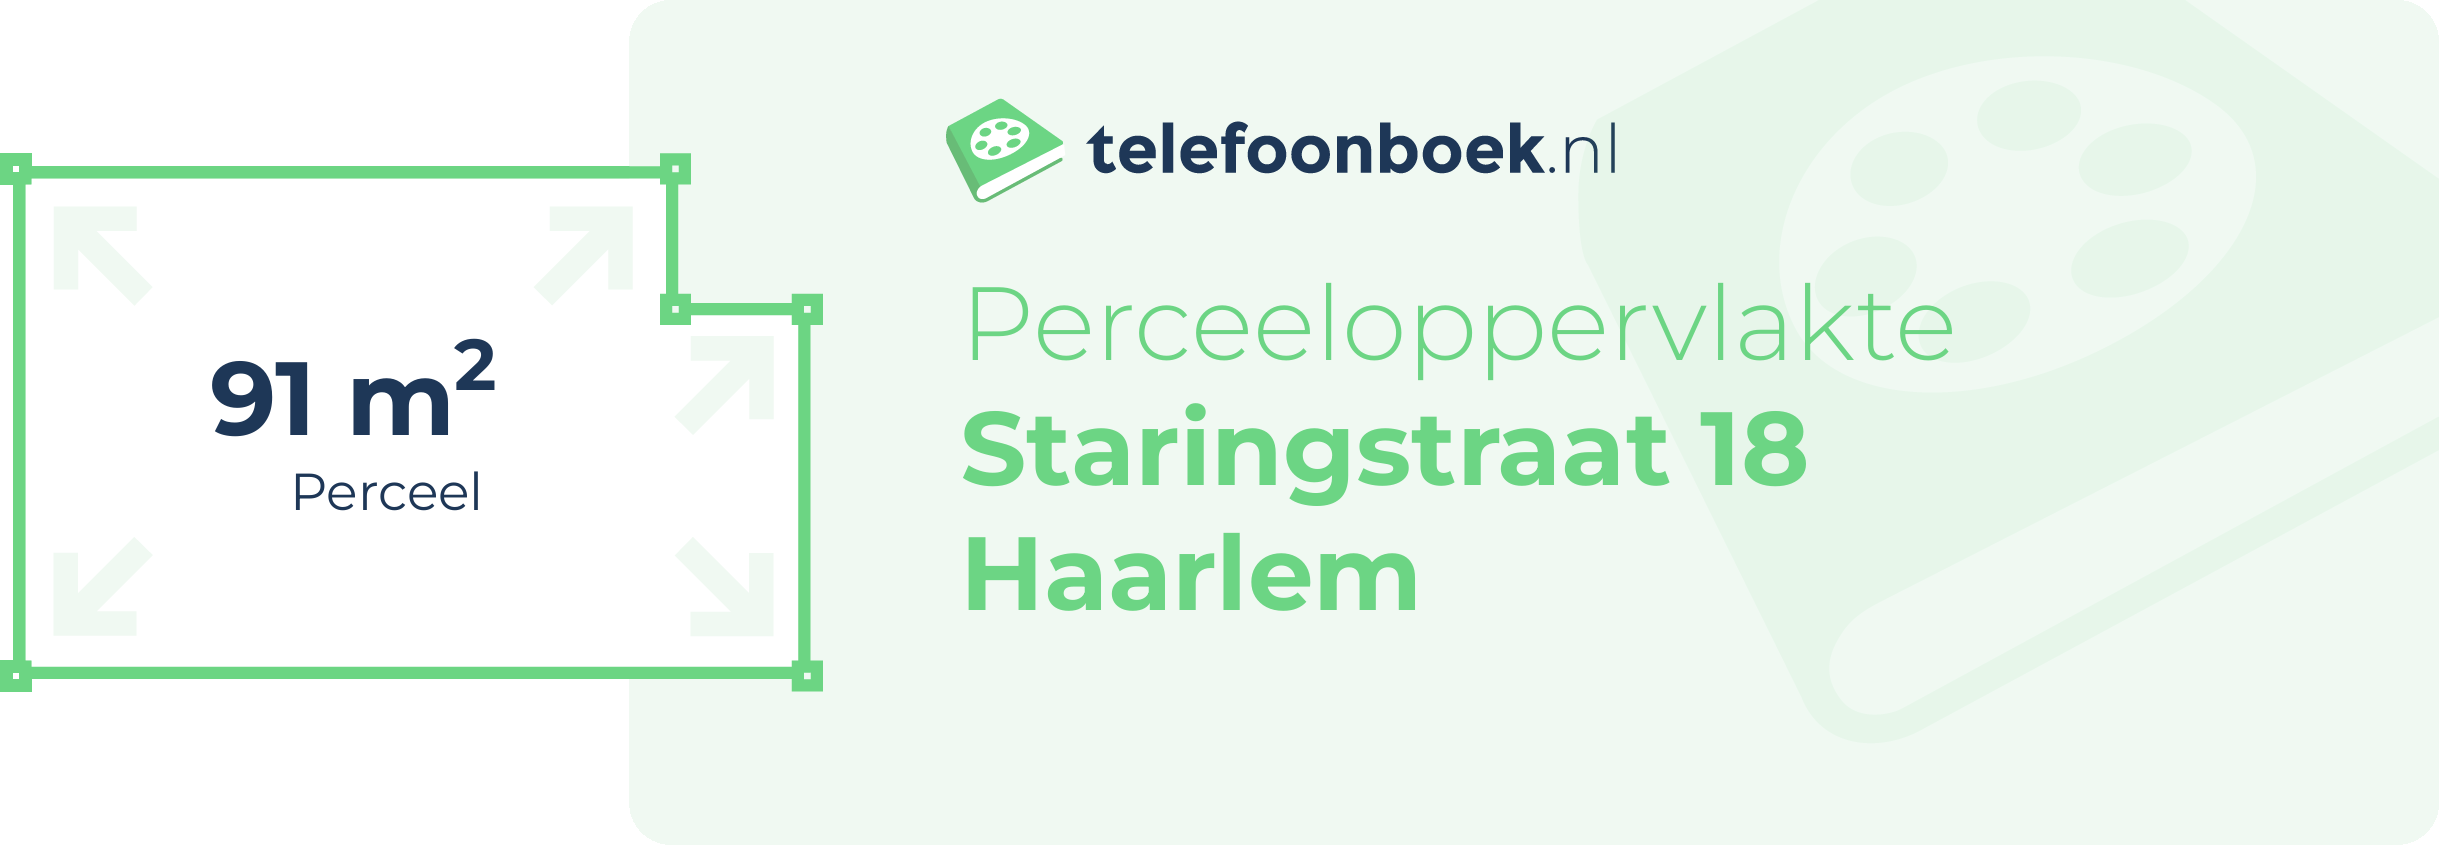 Perceeloppervlakte Staringstraat 18 Haarlem